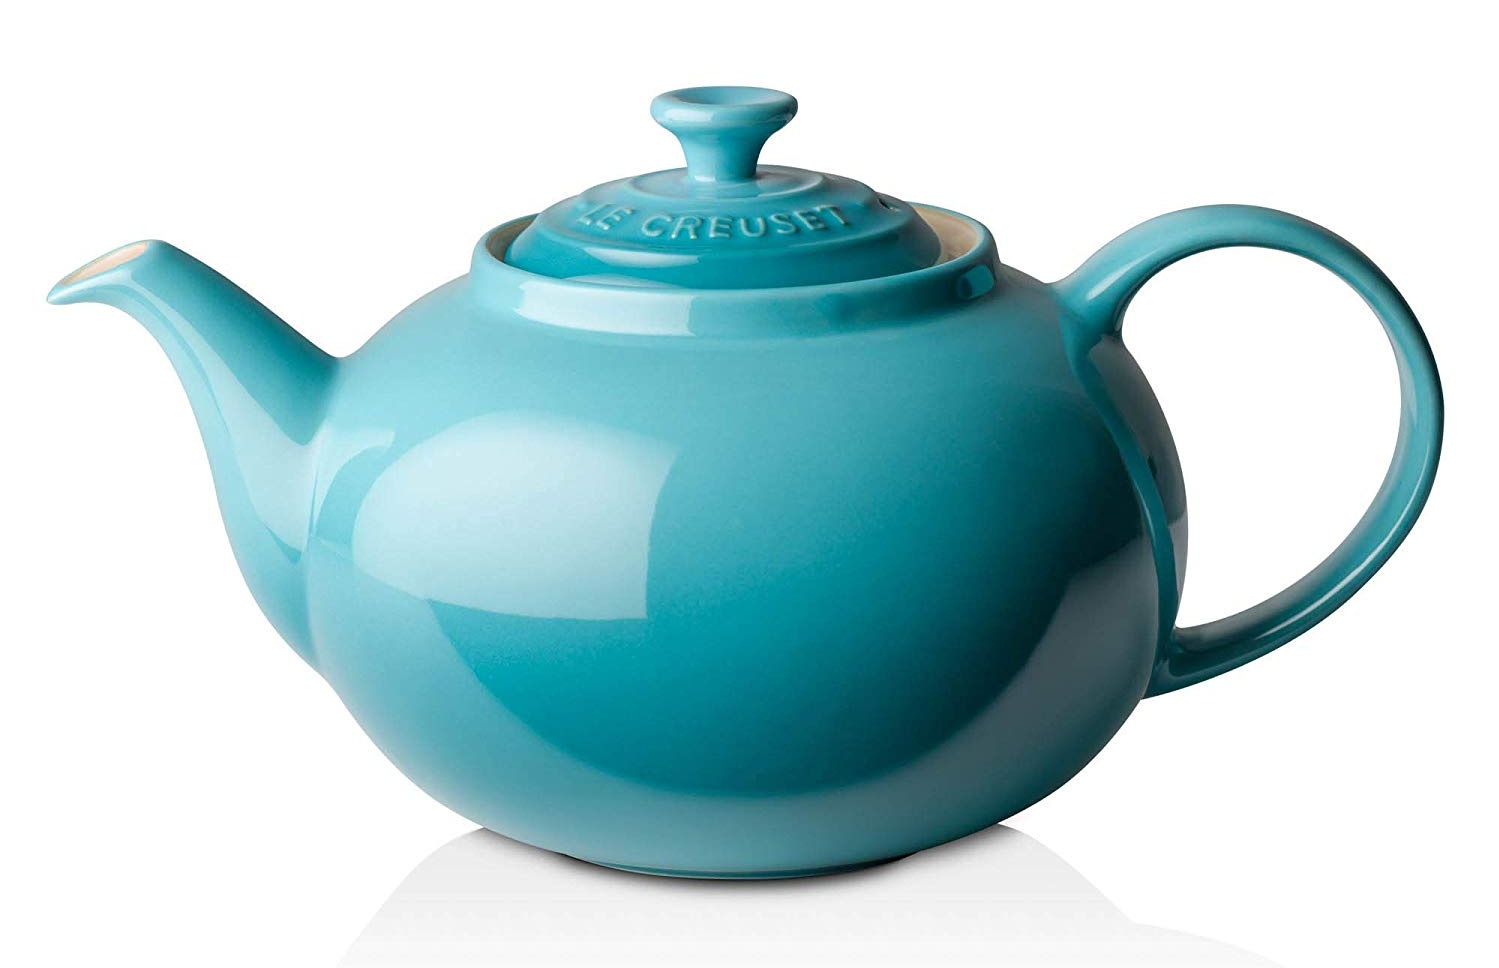 My Favorite Teapot